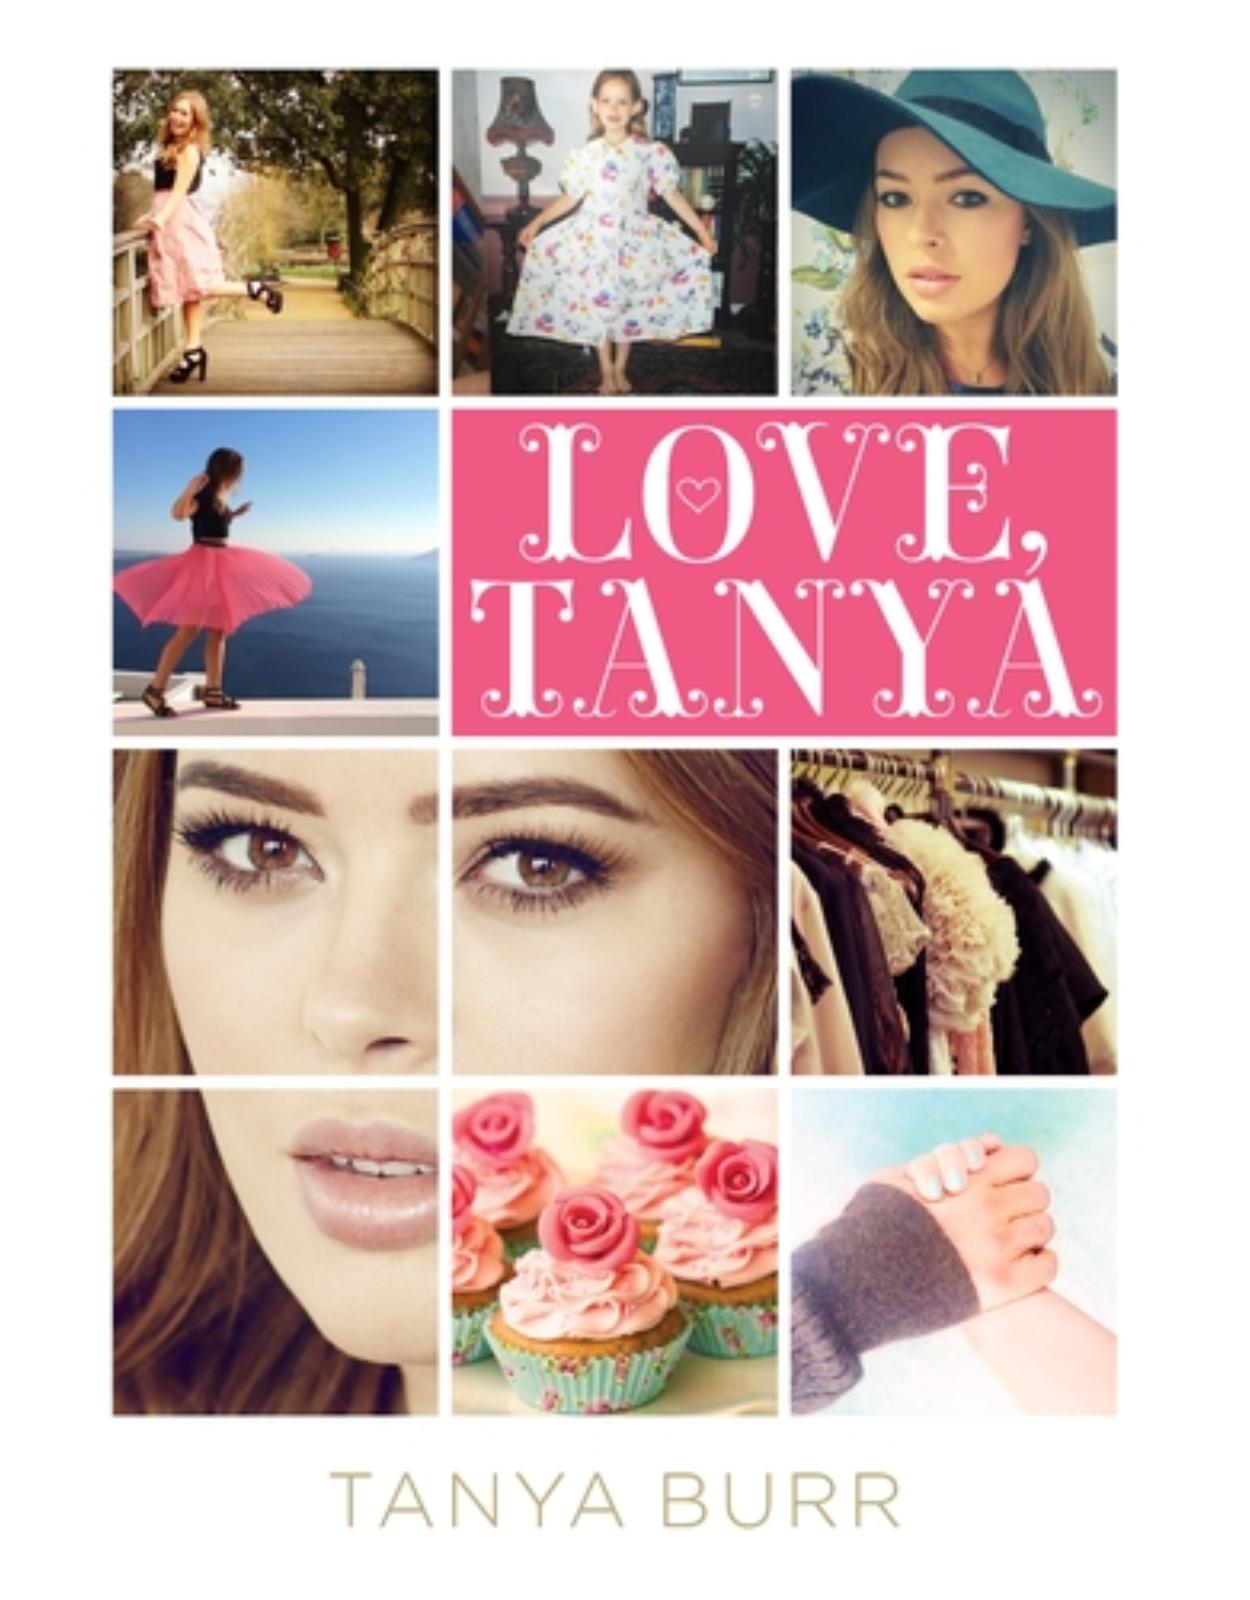 Love, Tanya